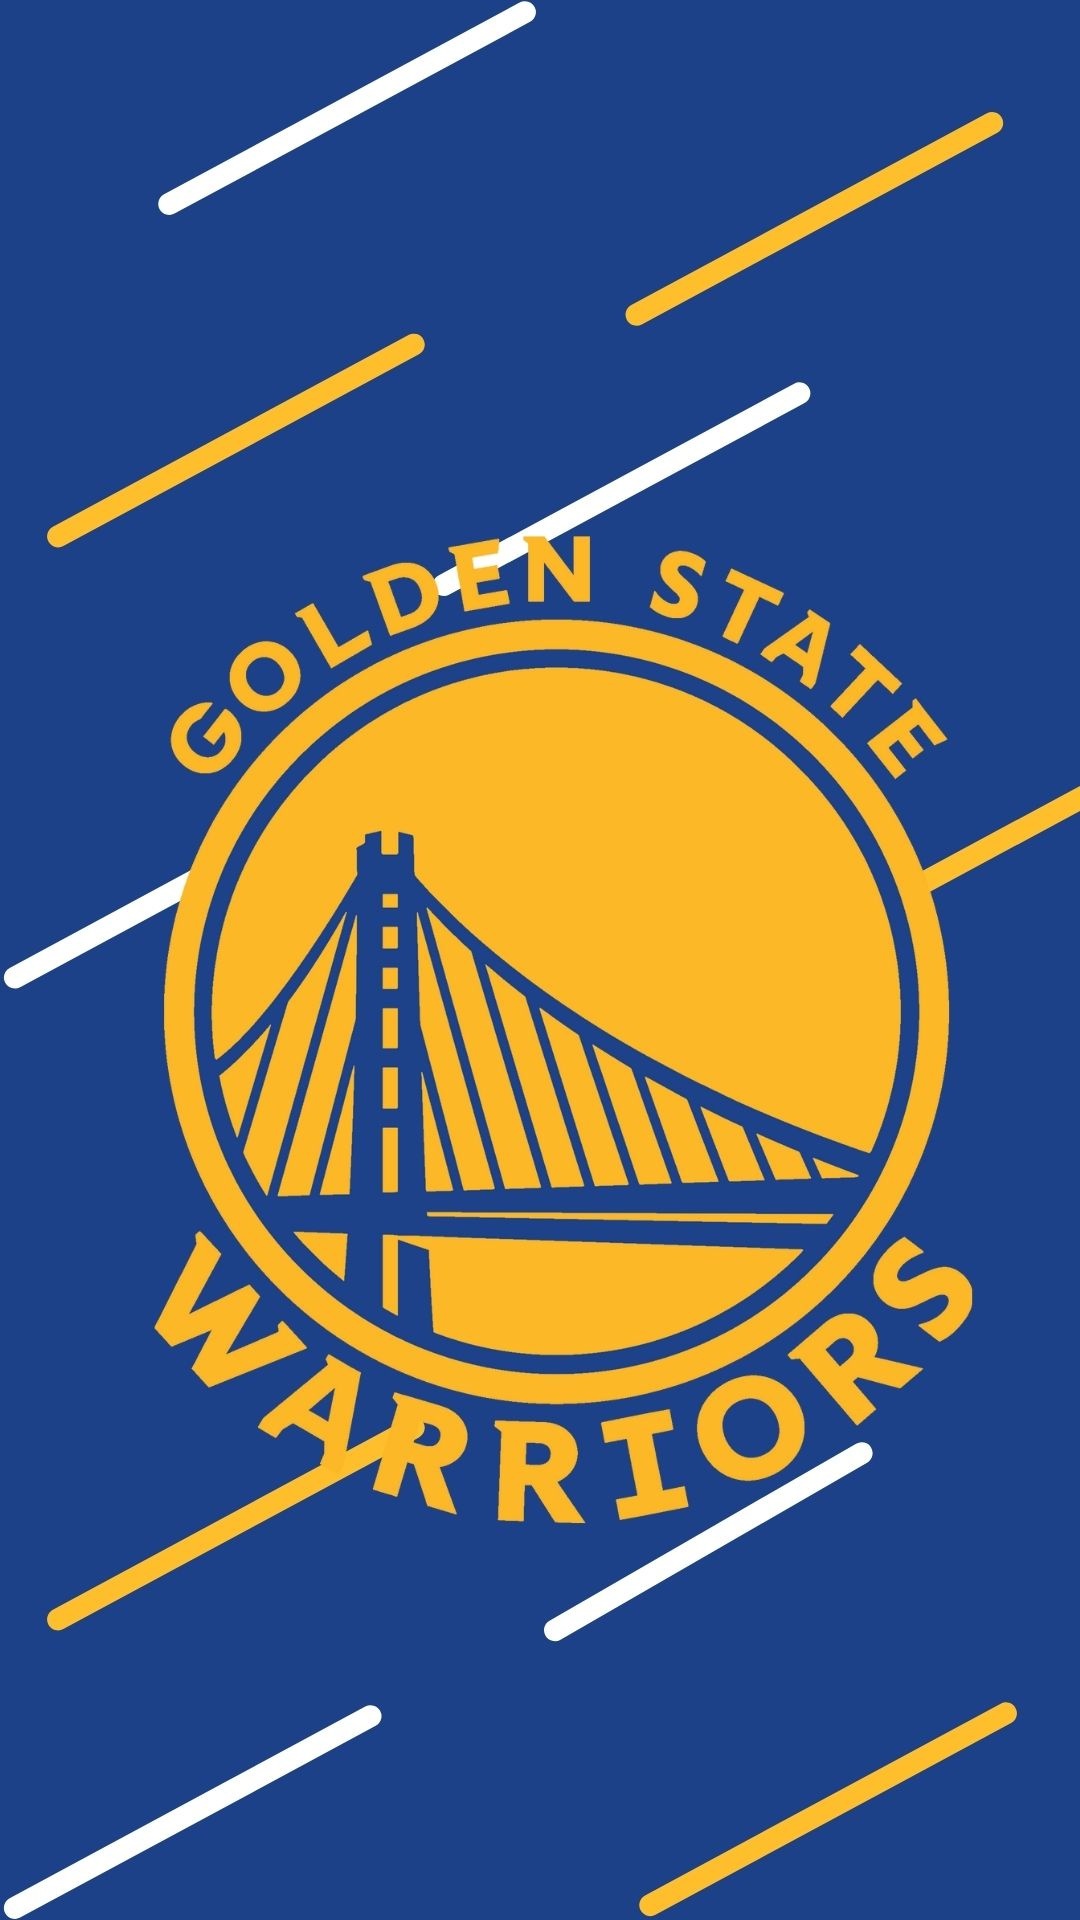 Wallpaper / Sports Golden State Warriors Phone Wallpaper, NBA, 1080x1920 free download